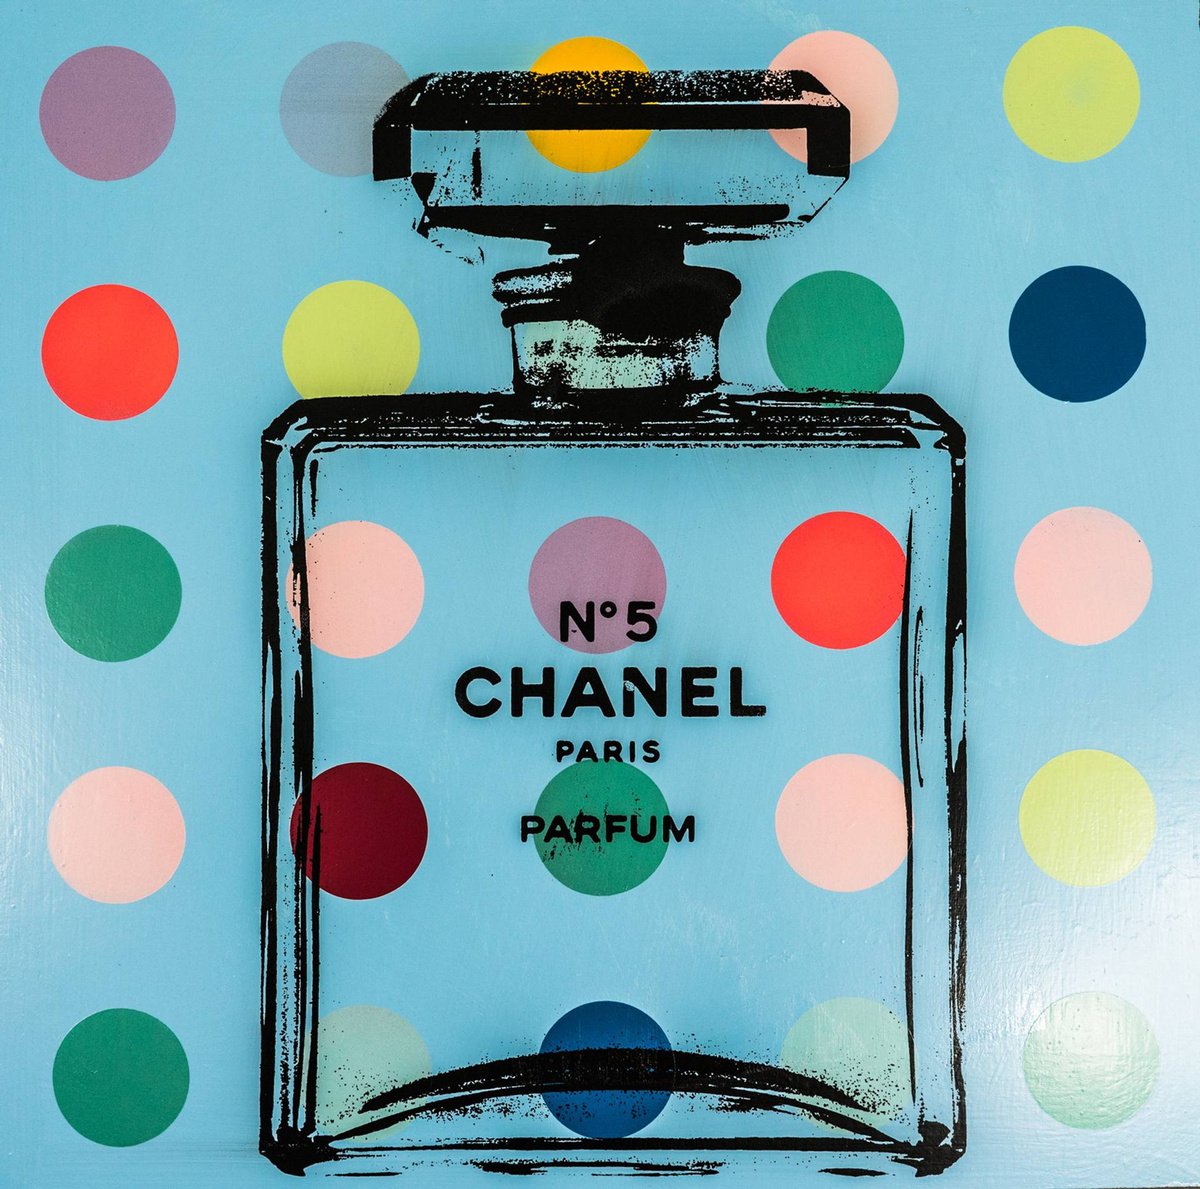 Chanel X Dots by Dane Shue